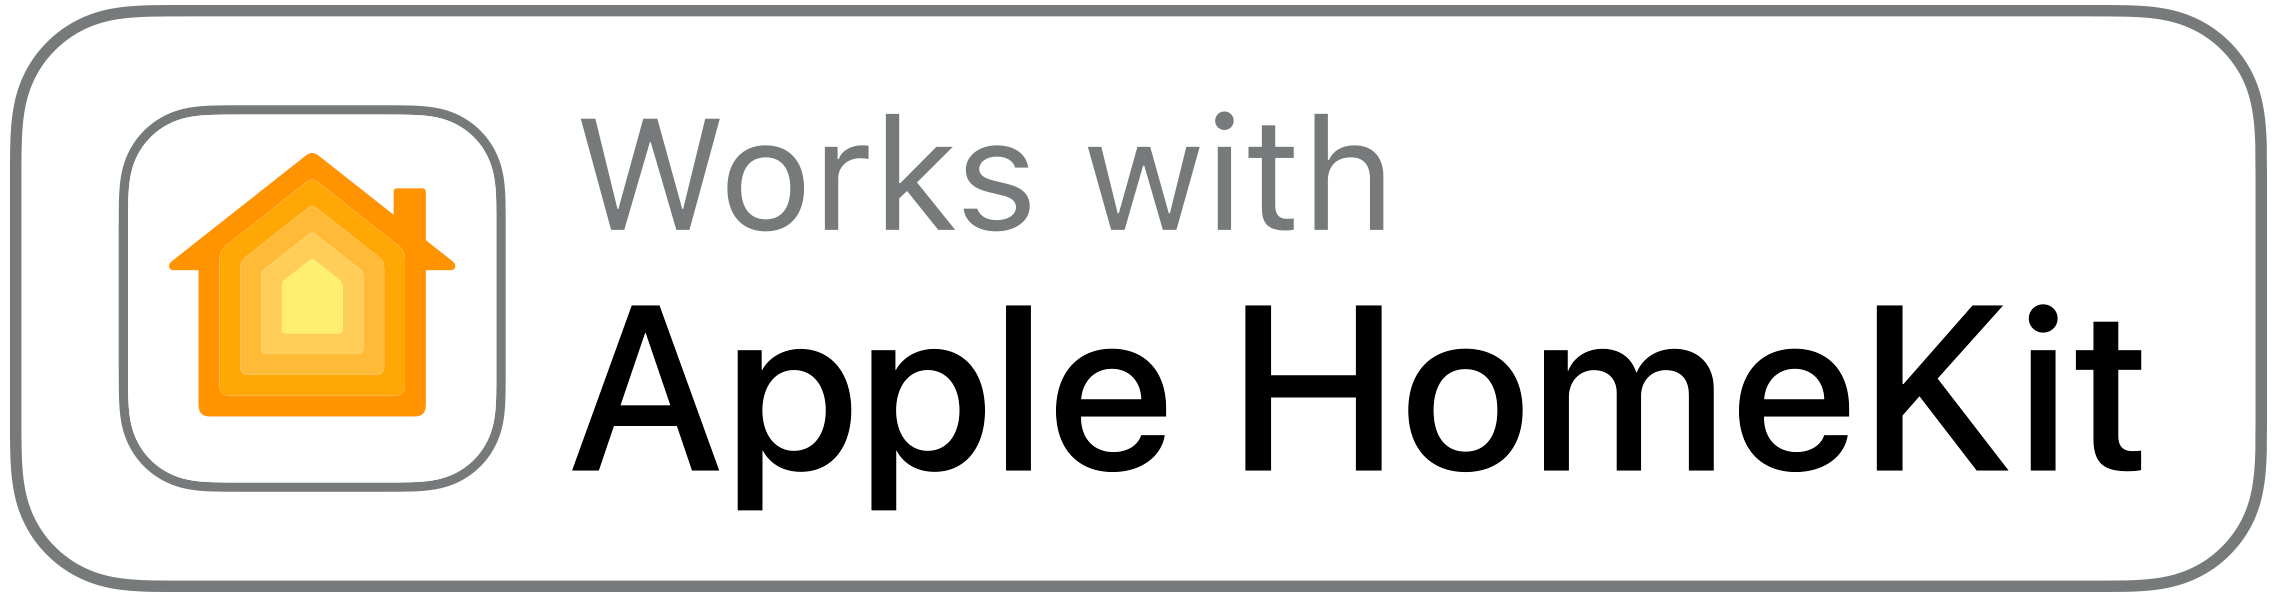 RainMachine HD-12/16 works with Apple HomeKit